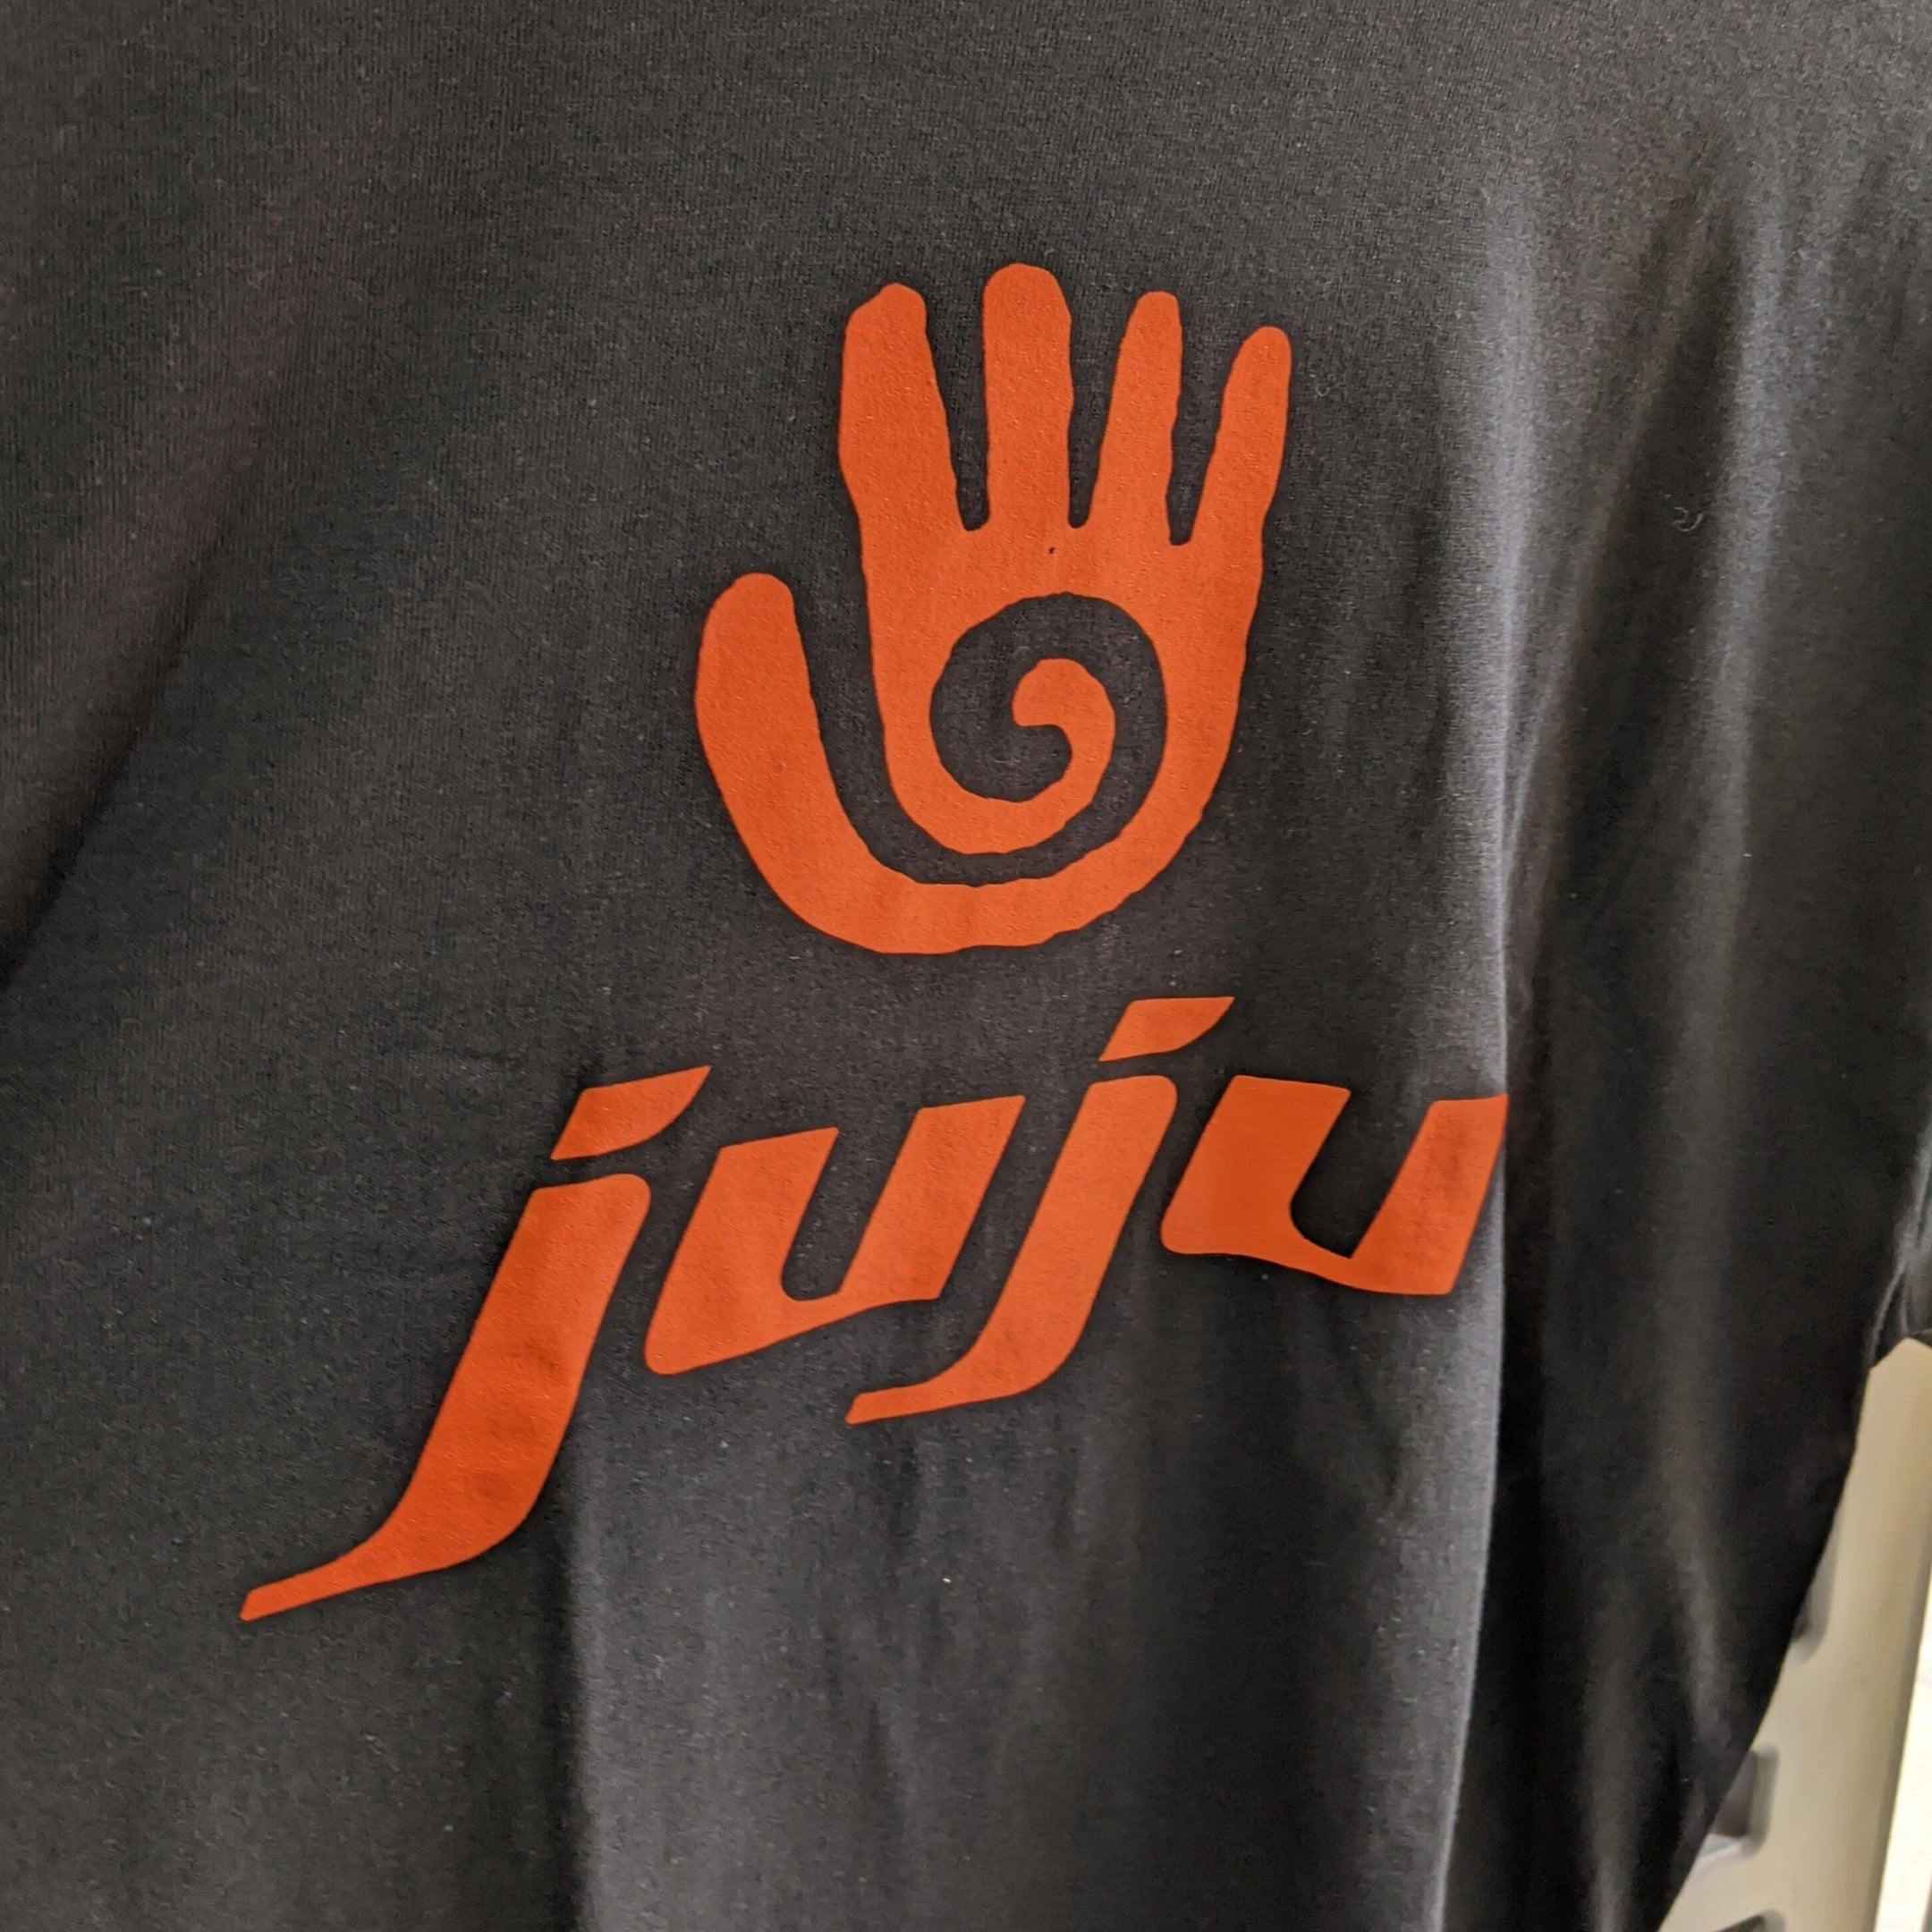 Juju Charity T Shirt